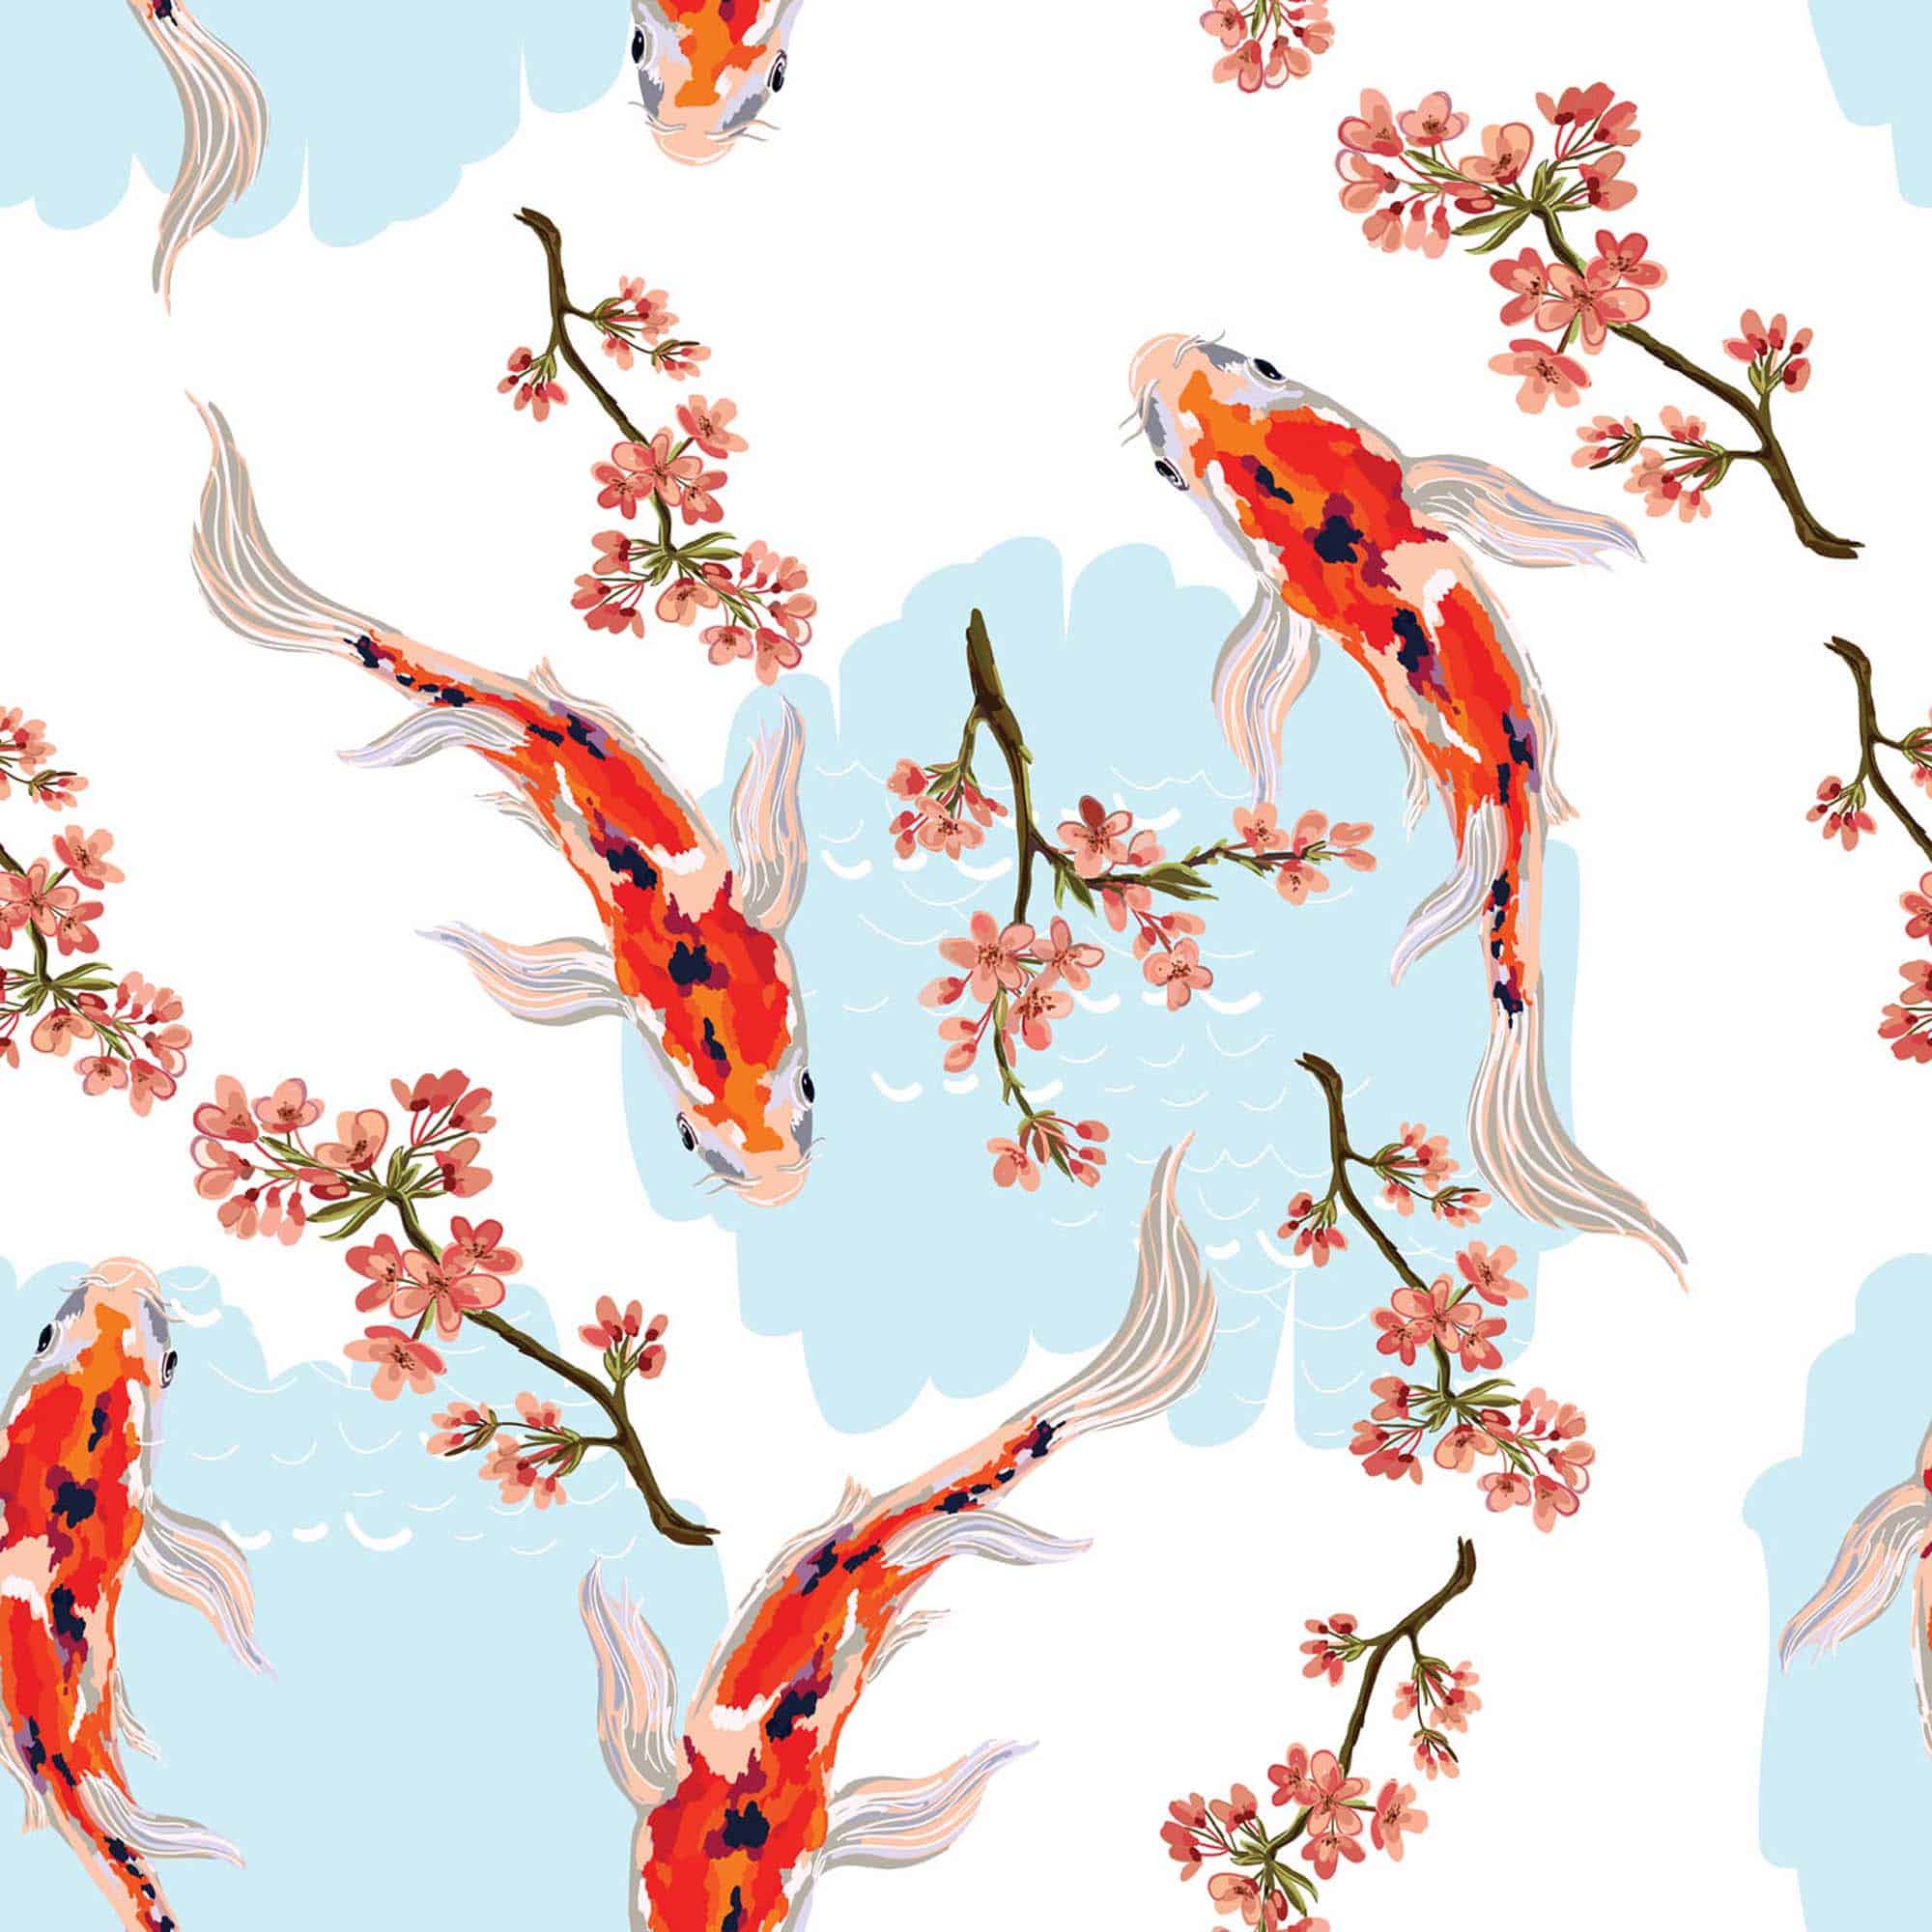 A seamless pattern of koi fish and cherry blossoms - Koi fish